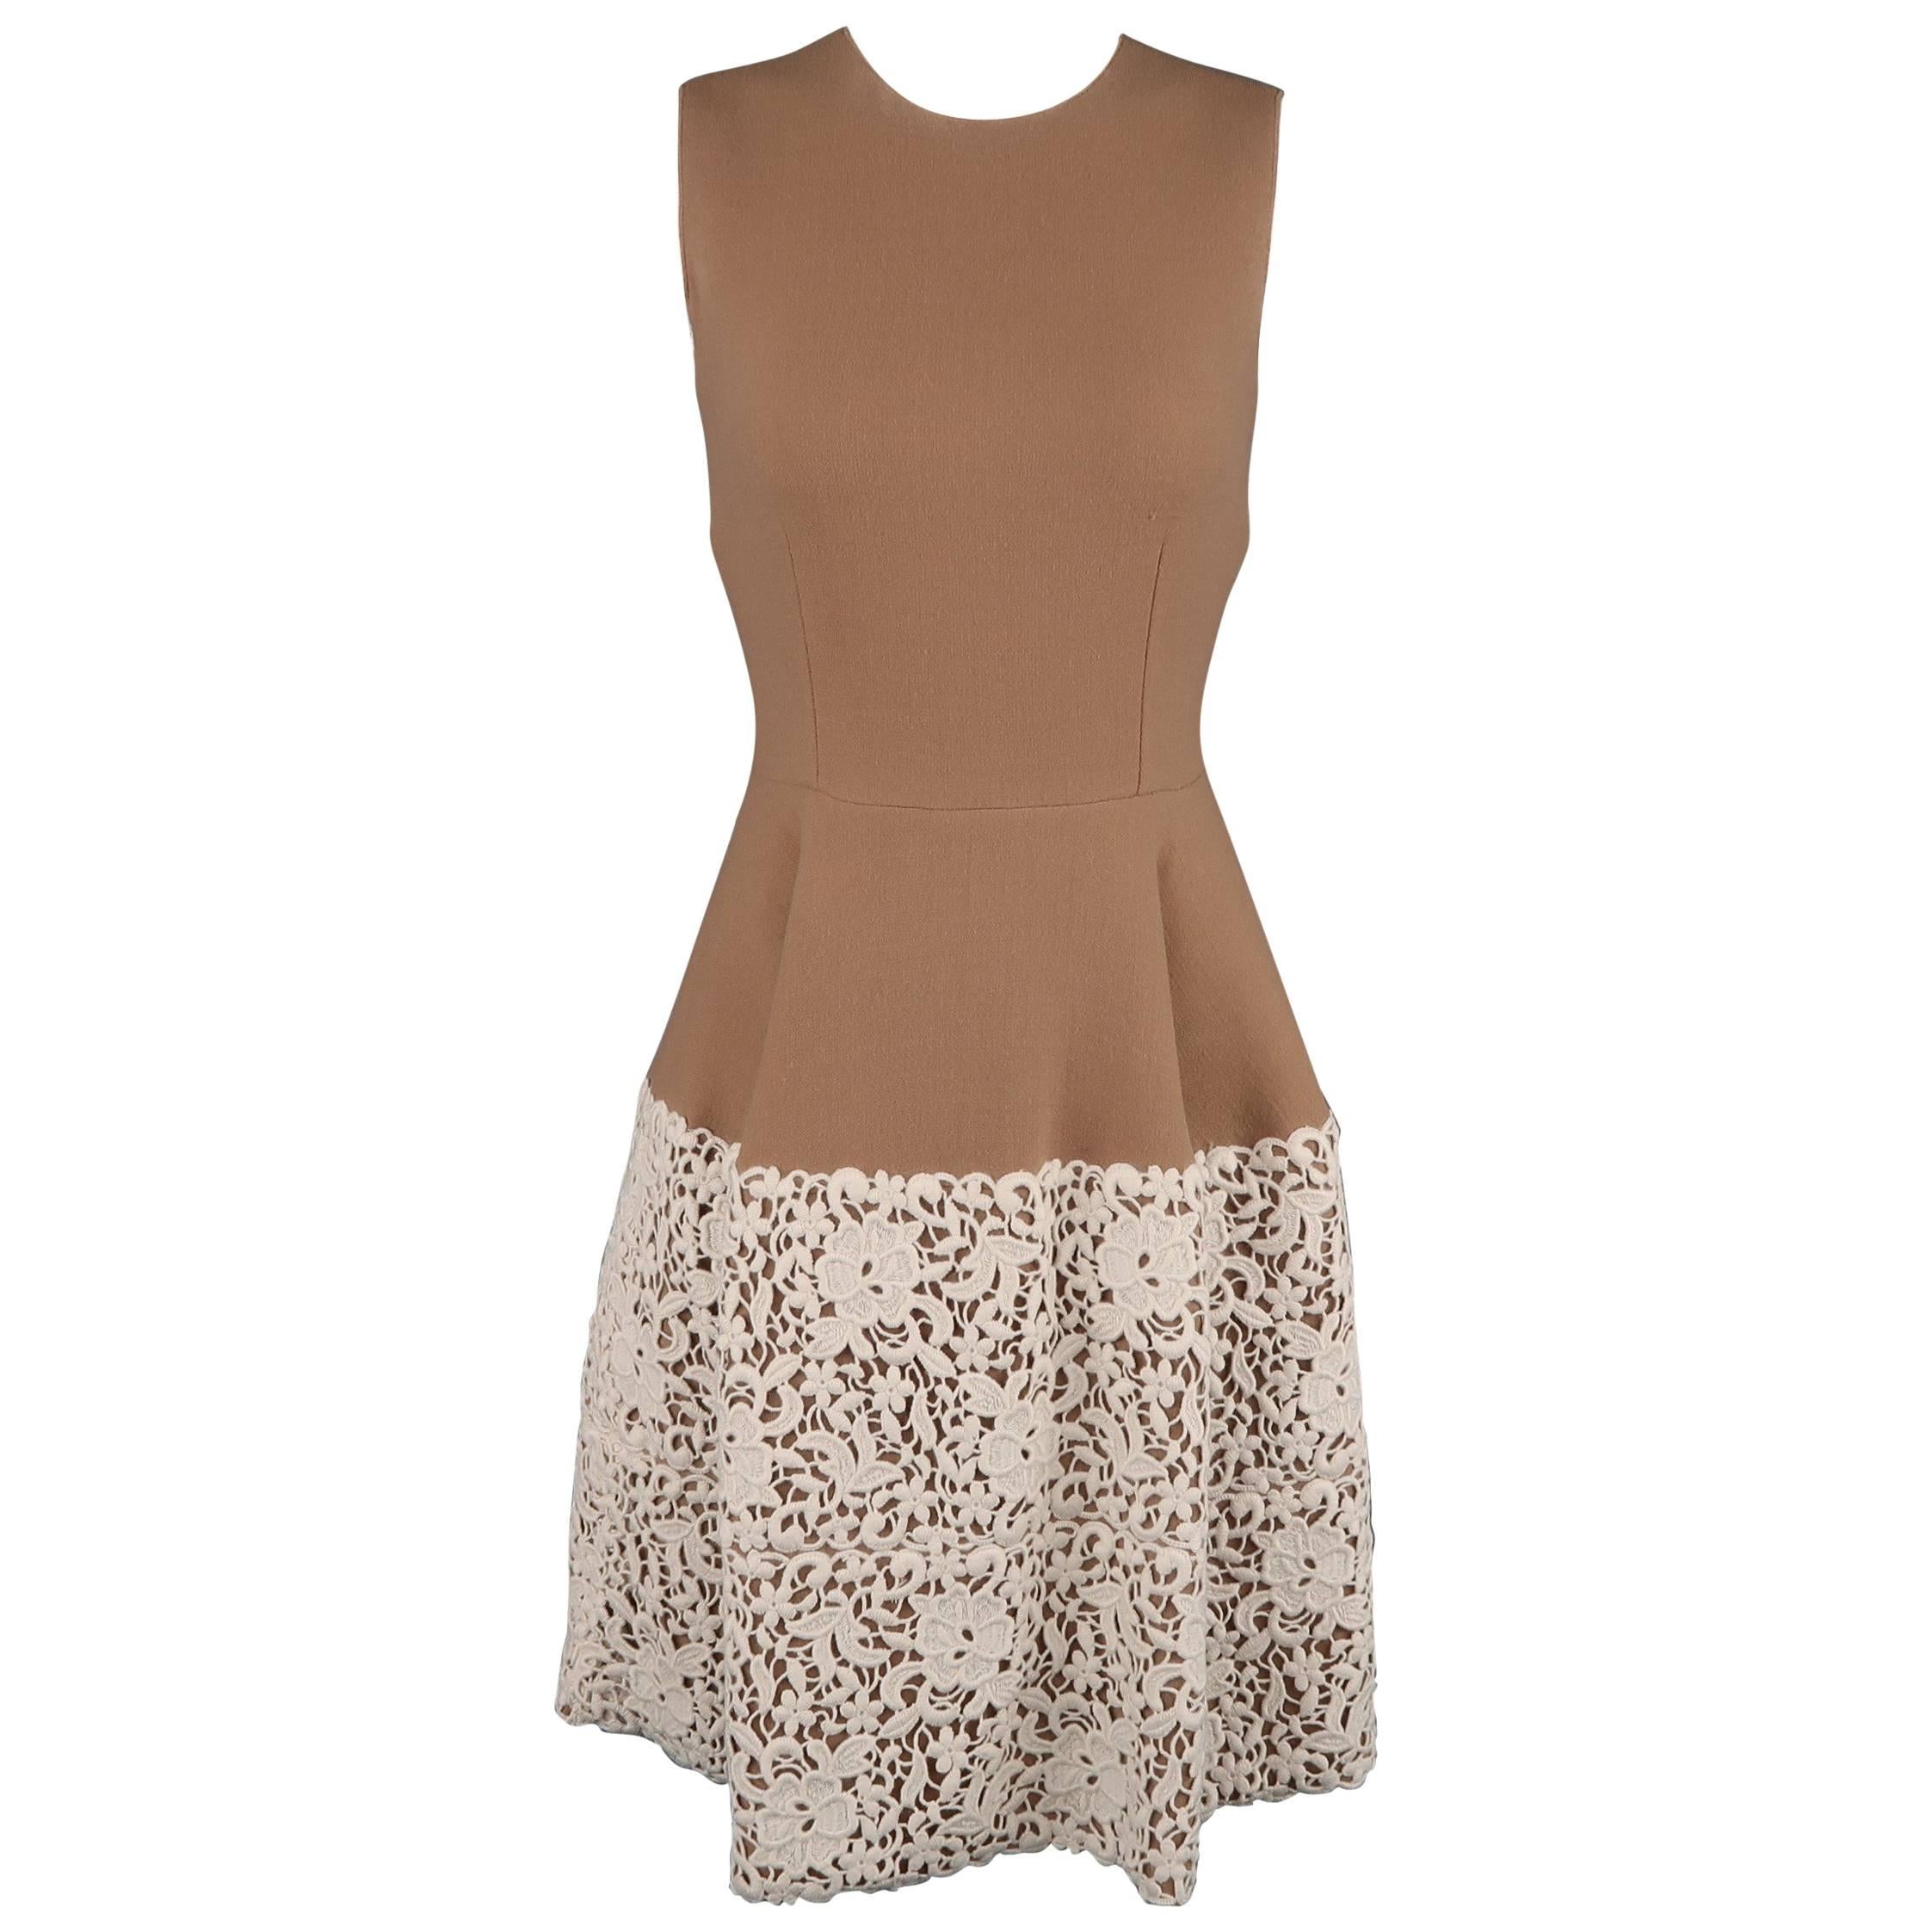 DOLCE & GABBANA Size 6 Camel Stretch Wool Cream Lace Skirt Cocktail Dress